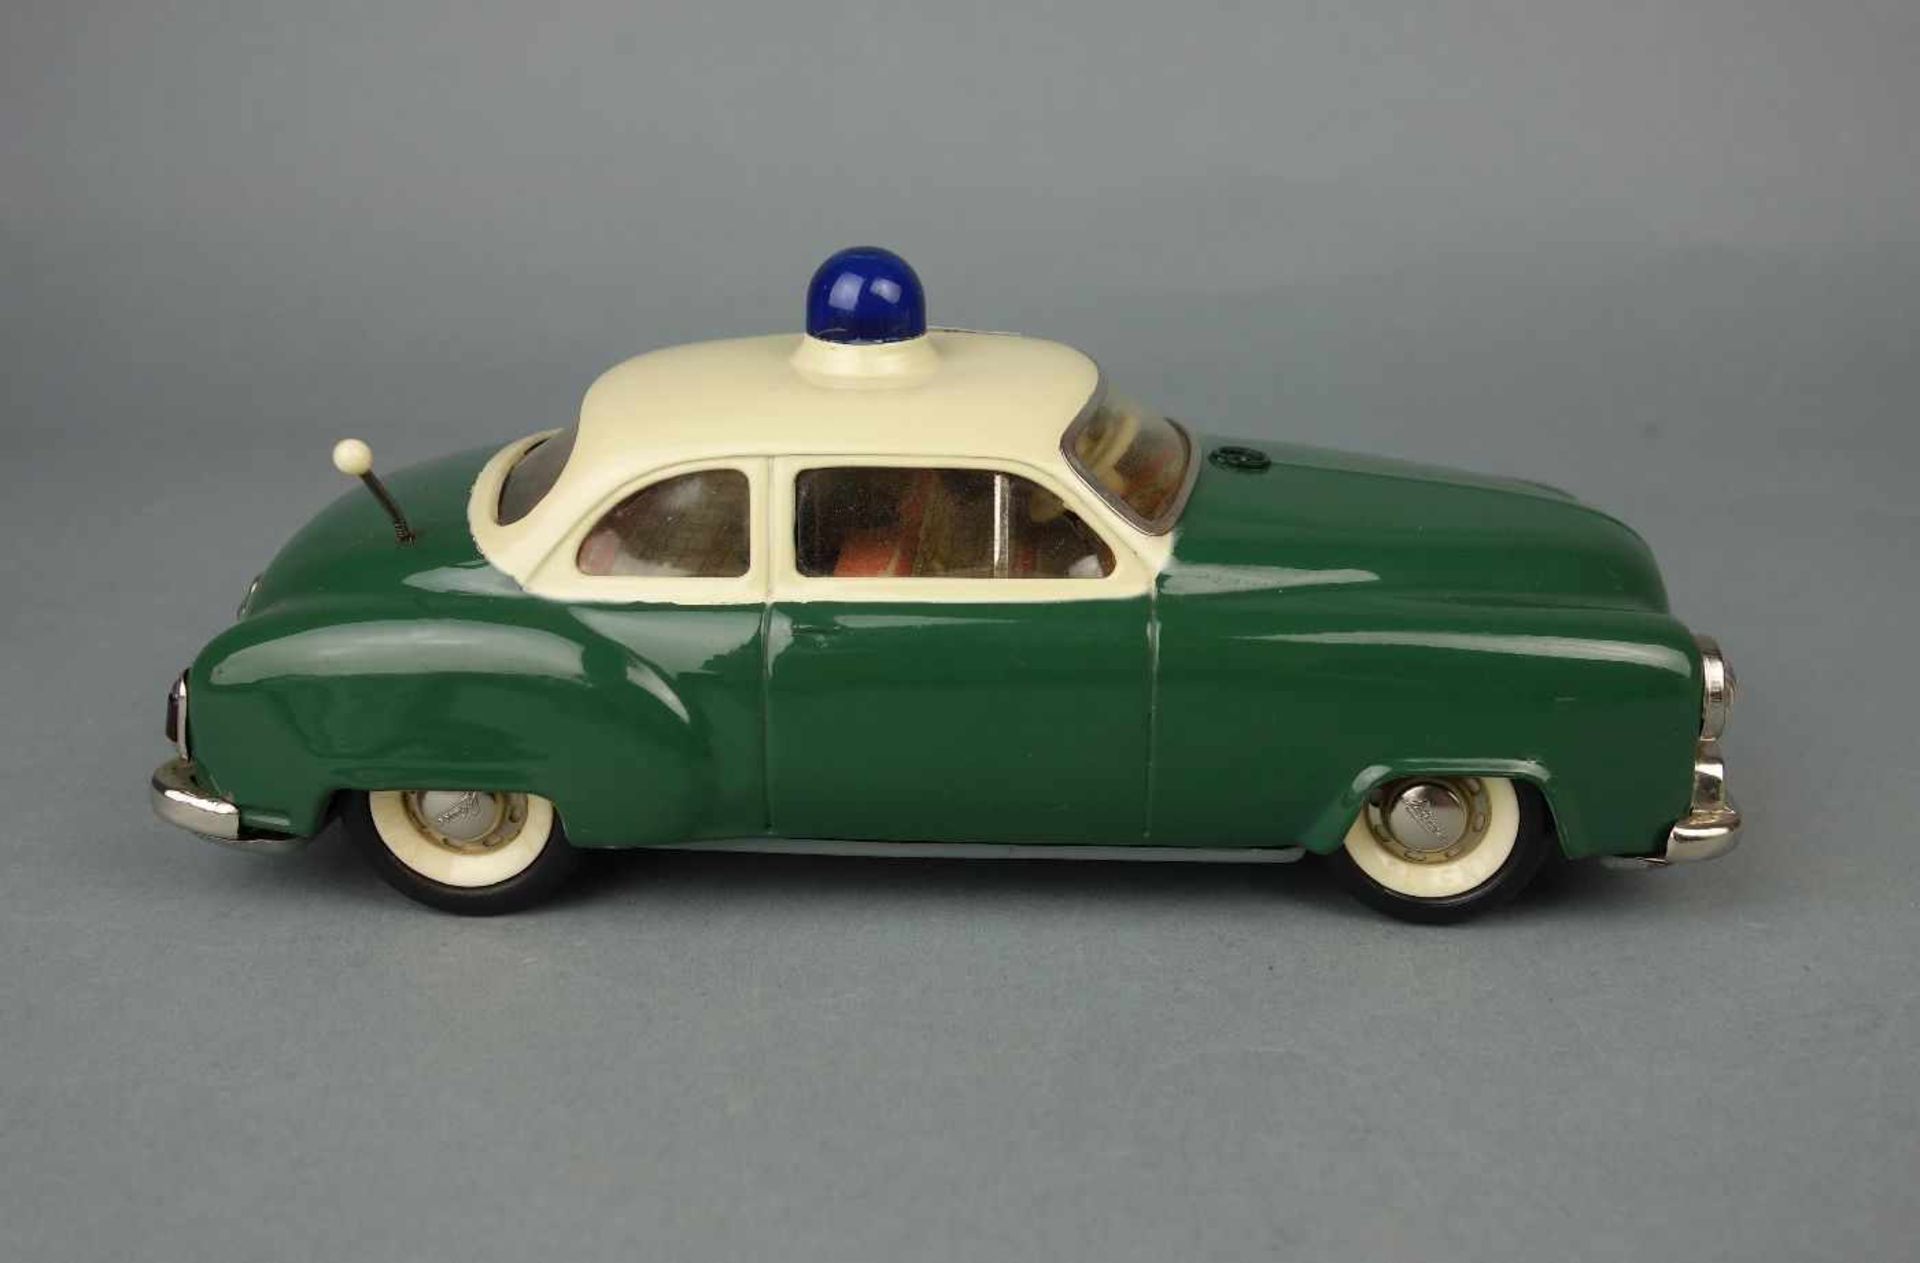 BLECHSPIELZEUG / FAHRZEUG: Polizeiauto / Alarm-Car 5340 / tin toy police car, Manufaktur Schuco / - Bild 3 aus 7